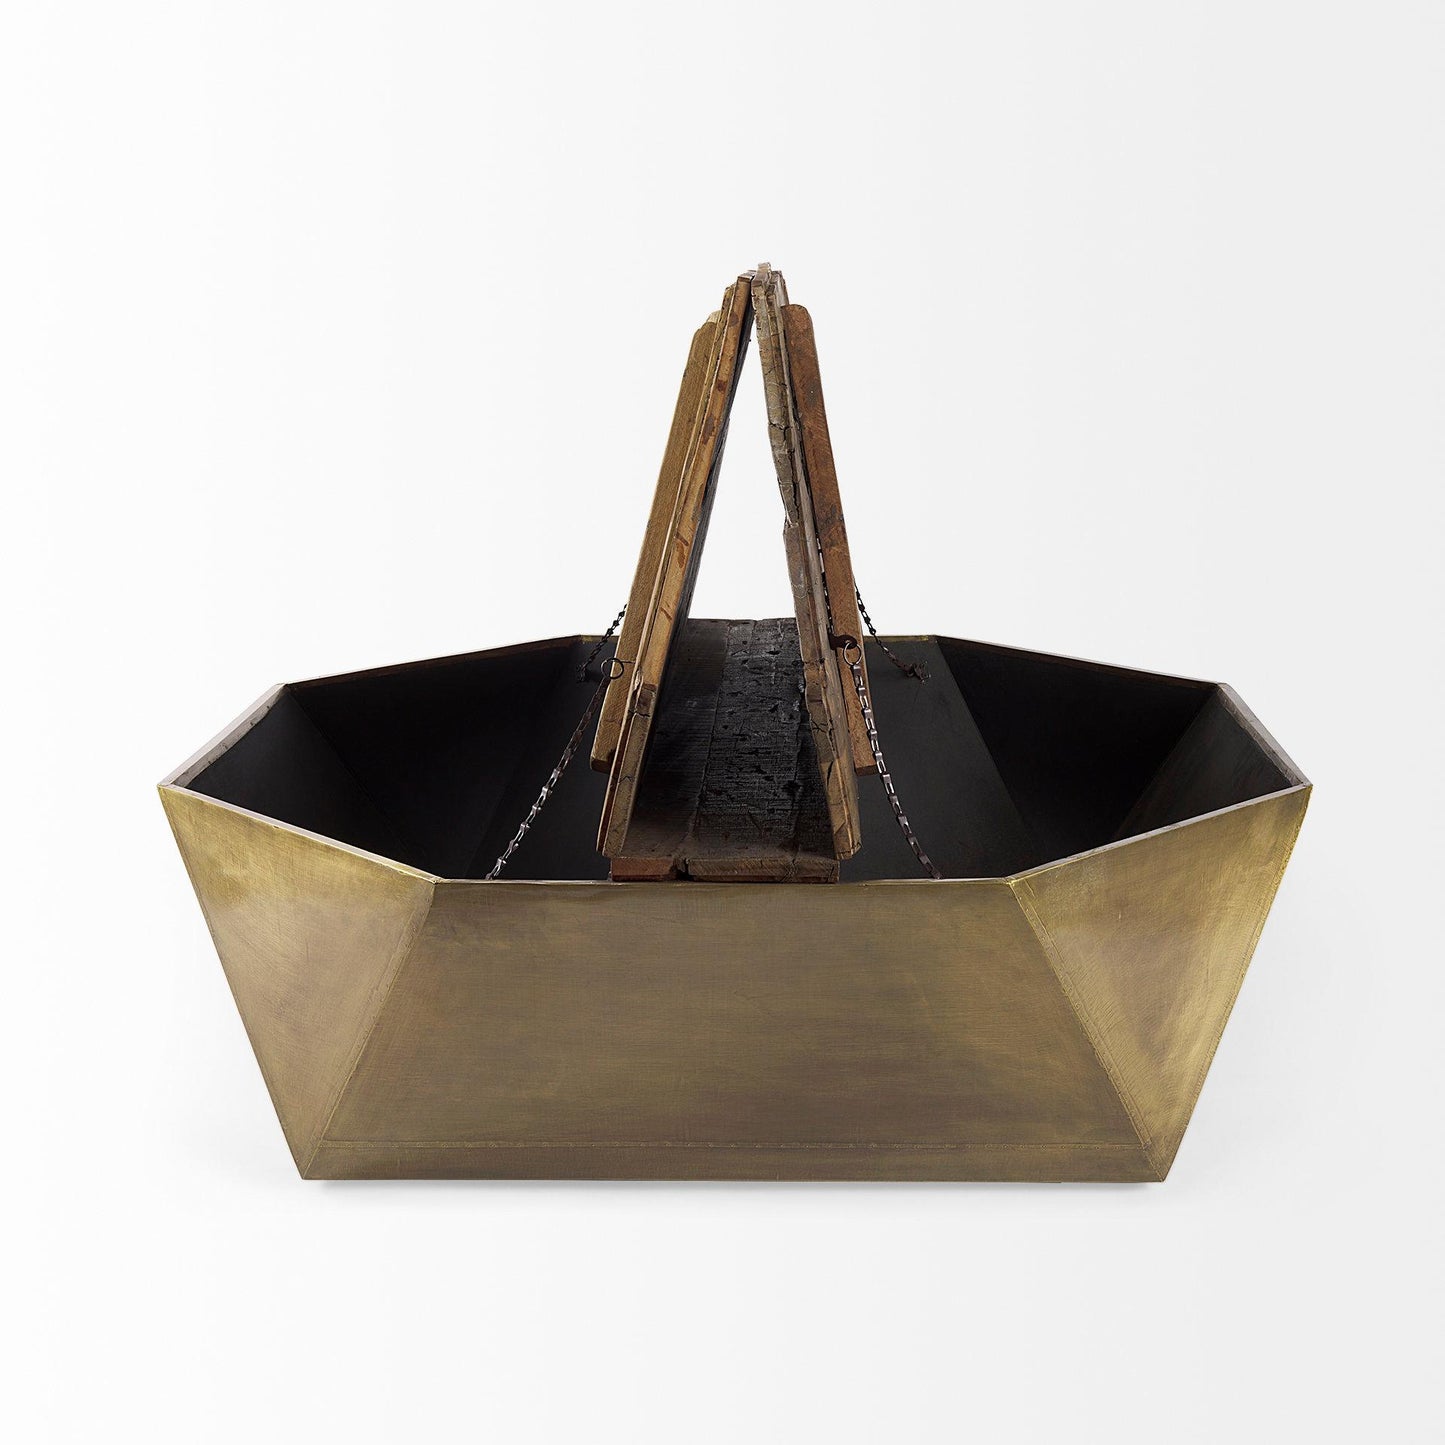 Esagono Octagonal Gold Metal-Clad Reclaimed Wood Coffee Table w/ Storage